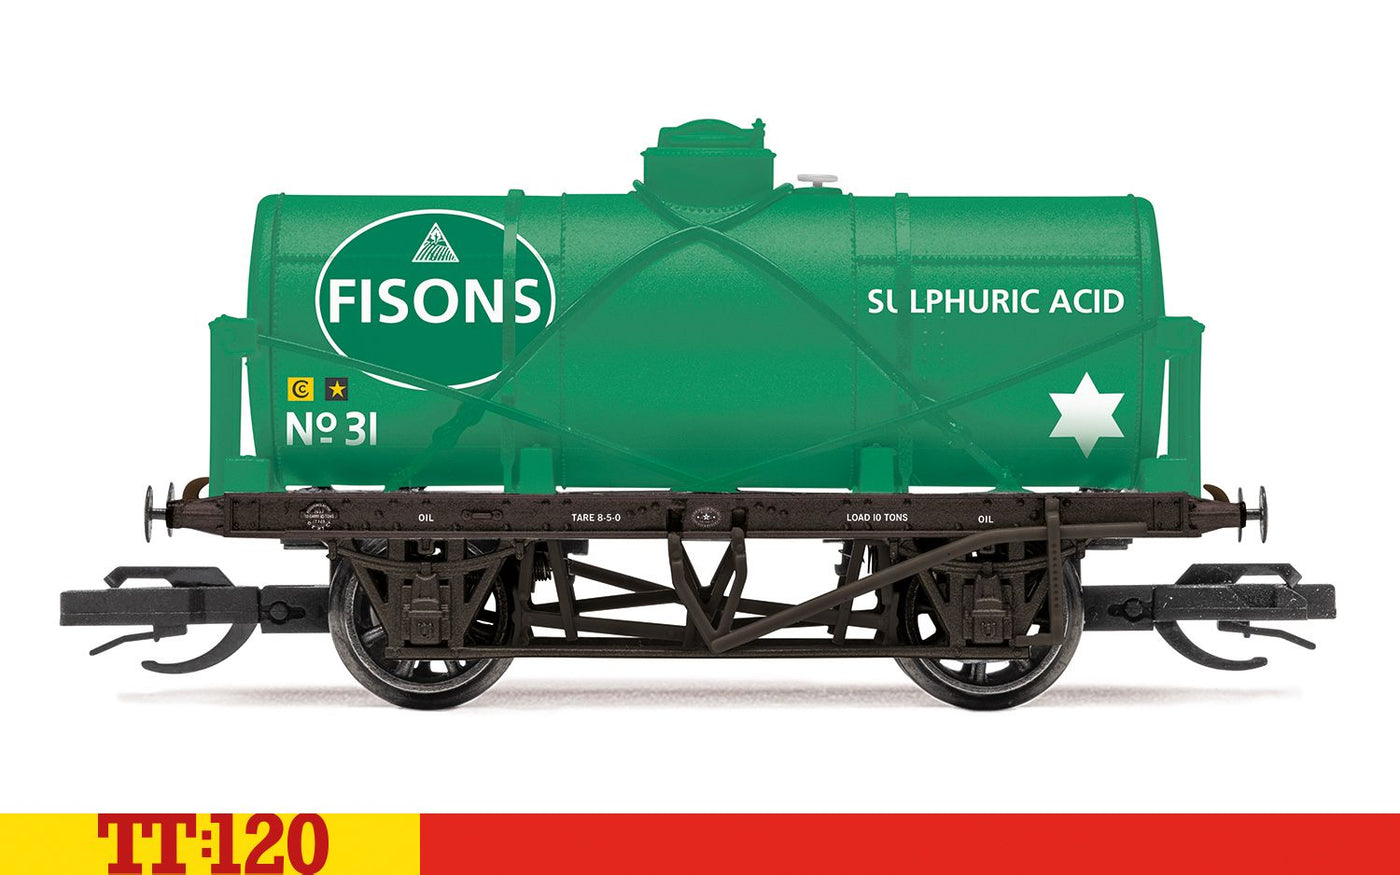 TT:120 12T Tank Wagon ‘Fisons Sulphuric Acid’ No. 31 - Era 2/3